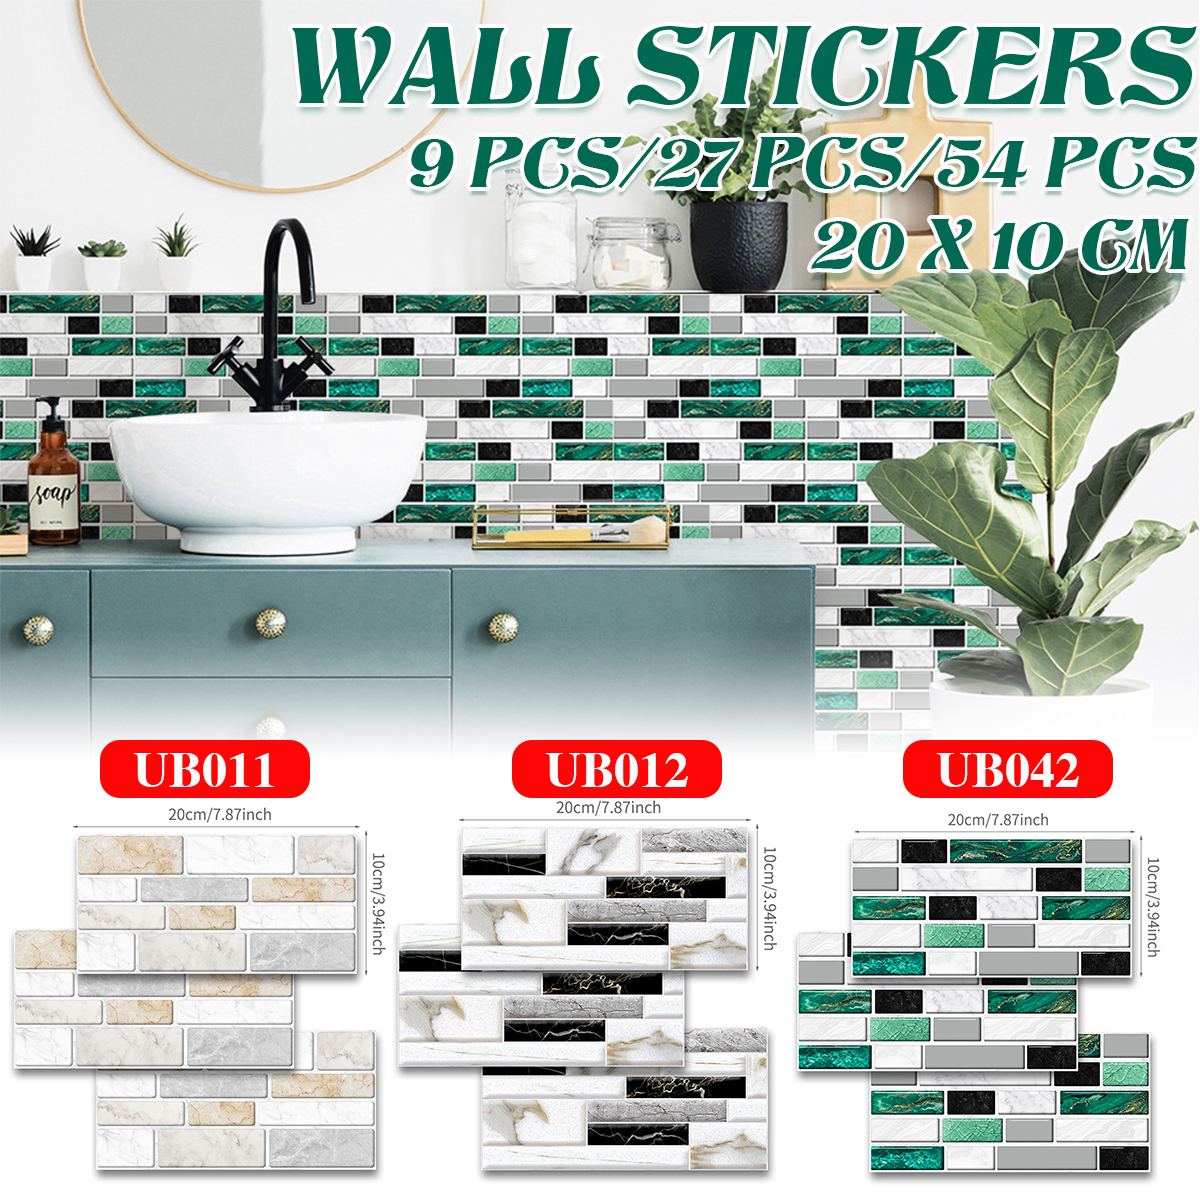 9pcs27pcs54pcs-Wall-Sticker-Kitchen-Tile-Stickers-Bathroom-Self-adhesive-Wall-Decor-Home-DIY-1823177-1